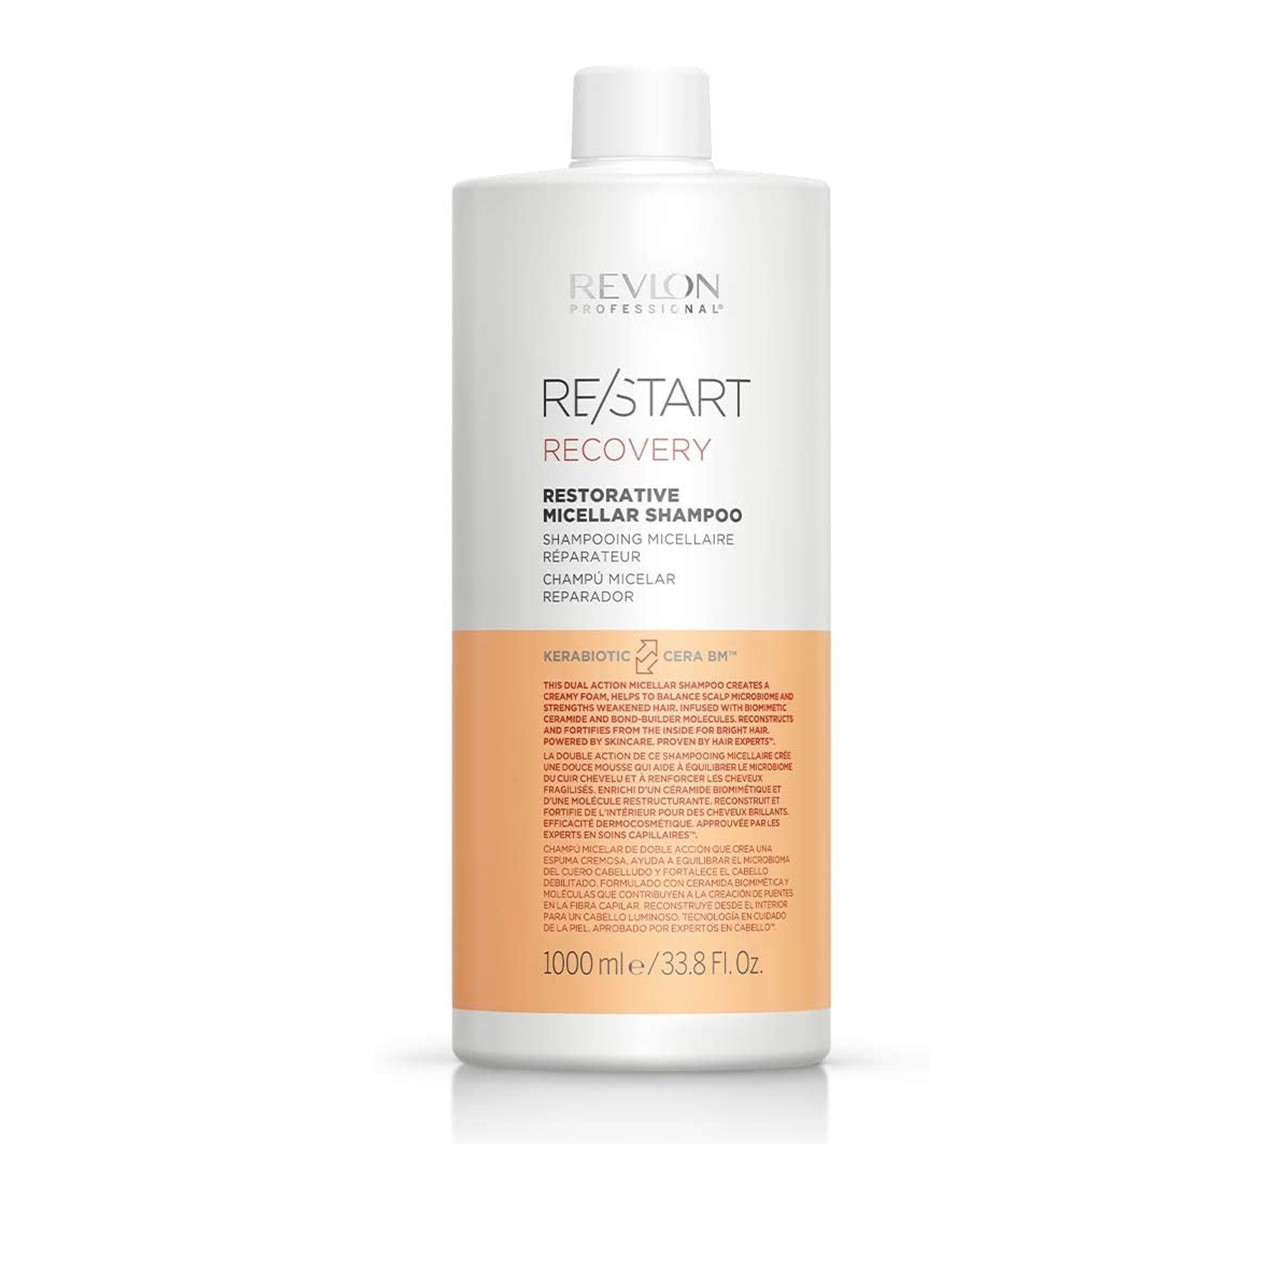 Revlon Professional Re/Start Recovery Restorative Shampoo 1L (33.81fl oz)